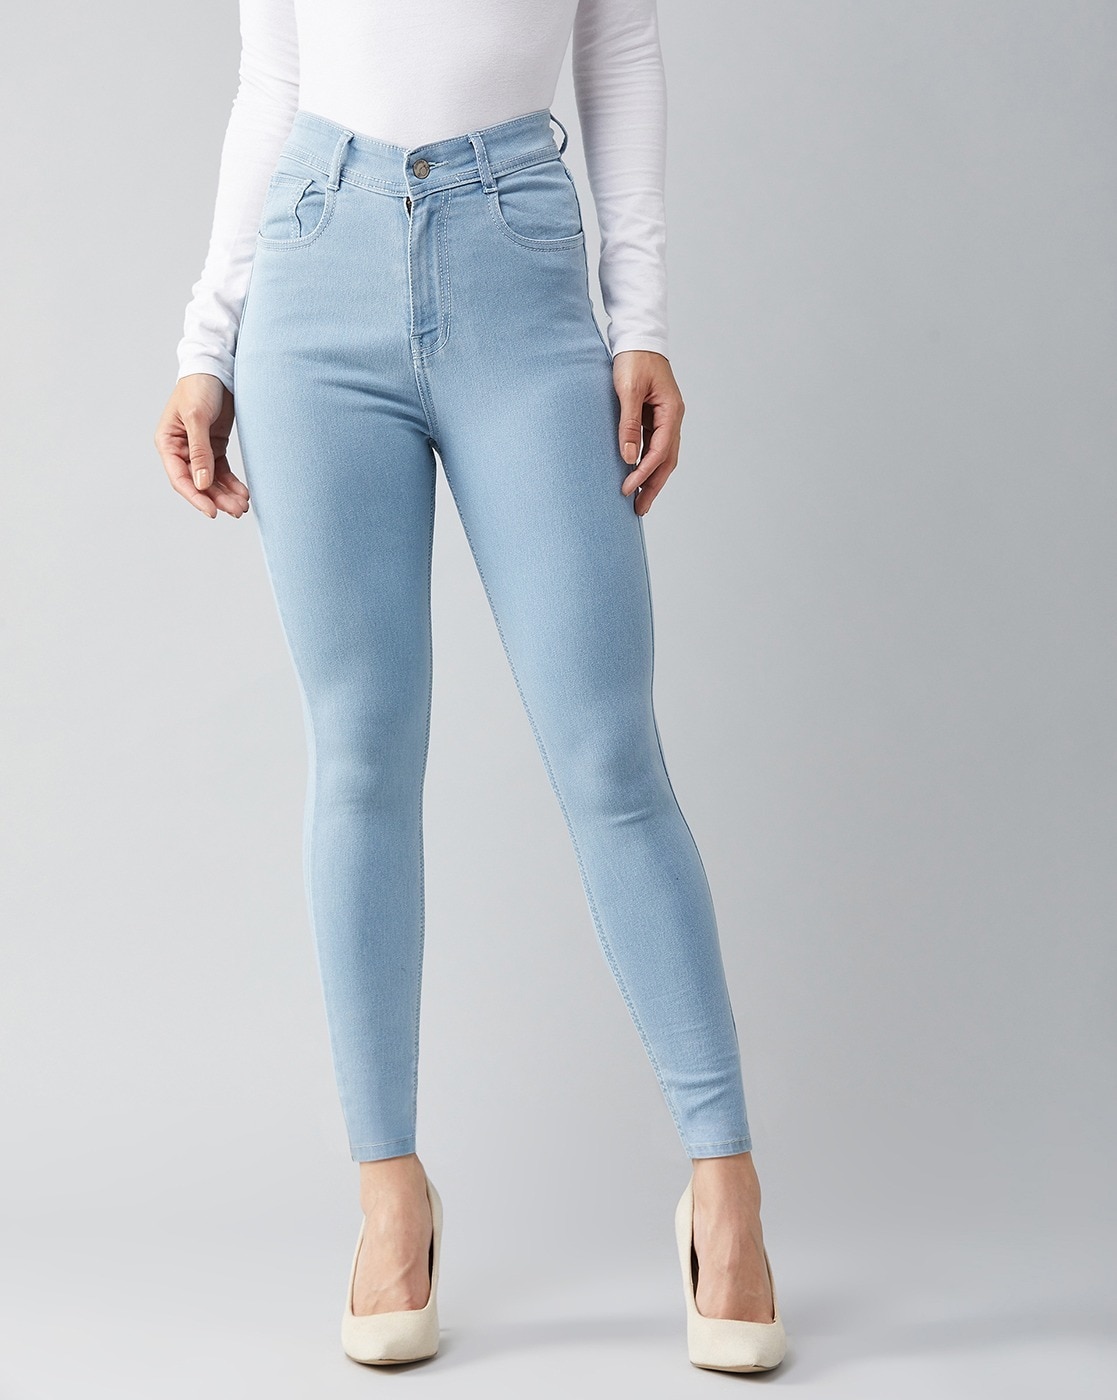 Ankle Skinny Jeans, White – Spanx